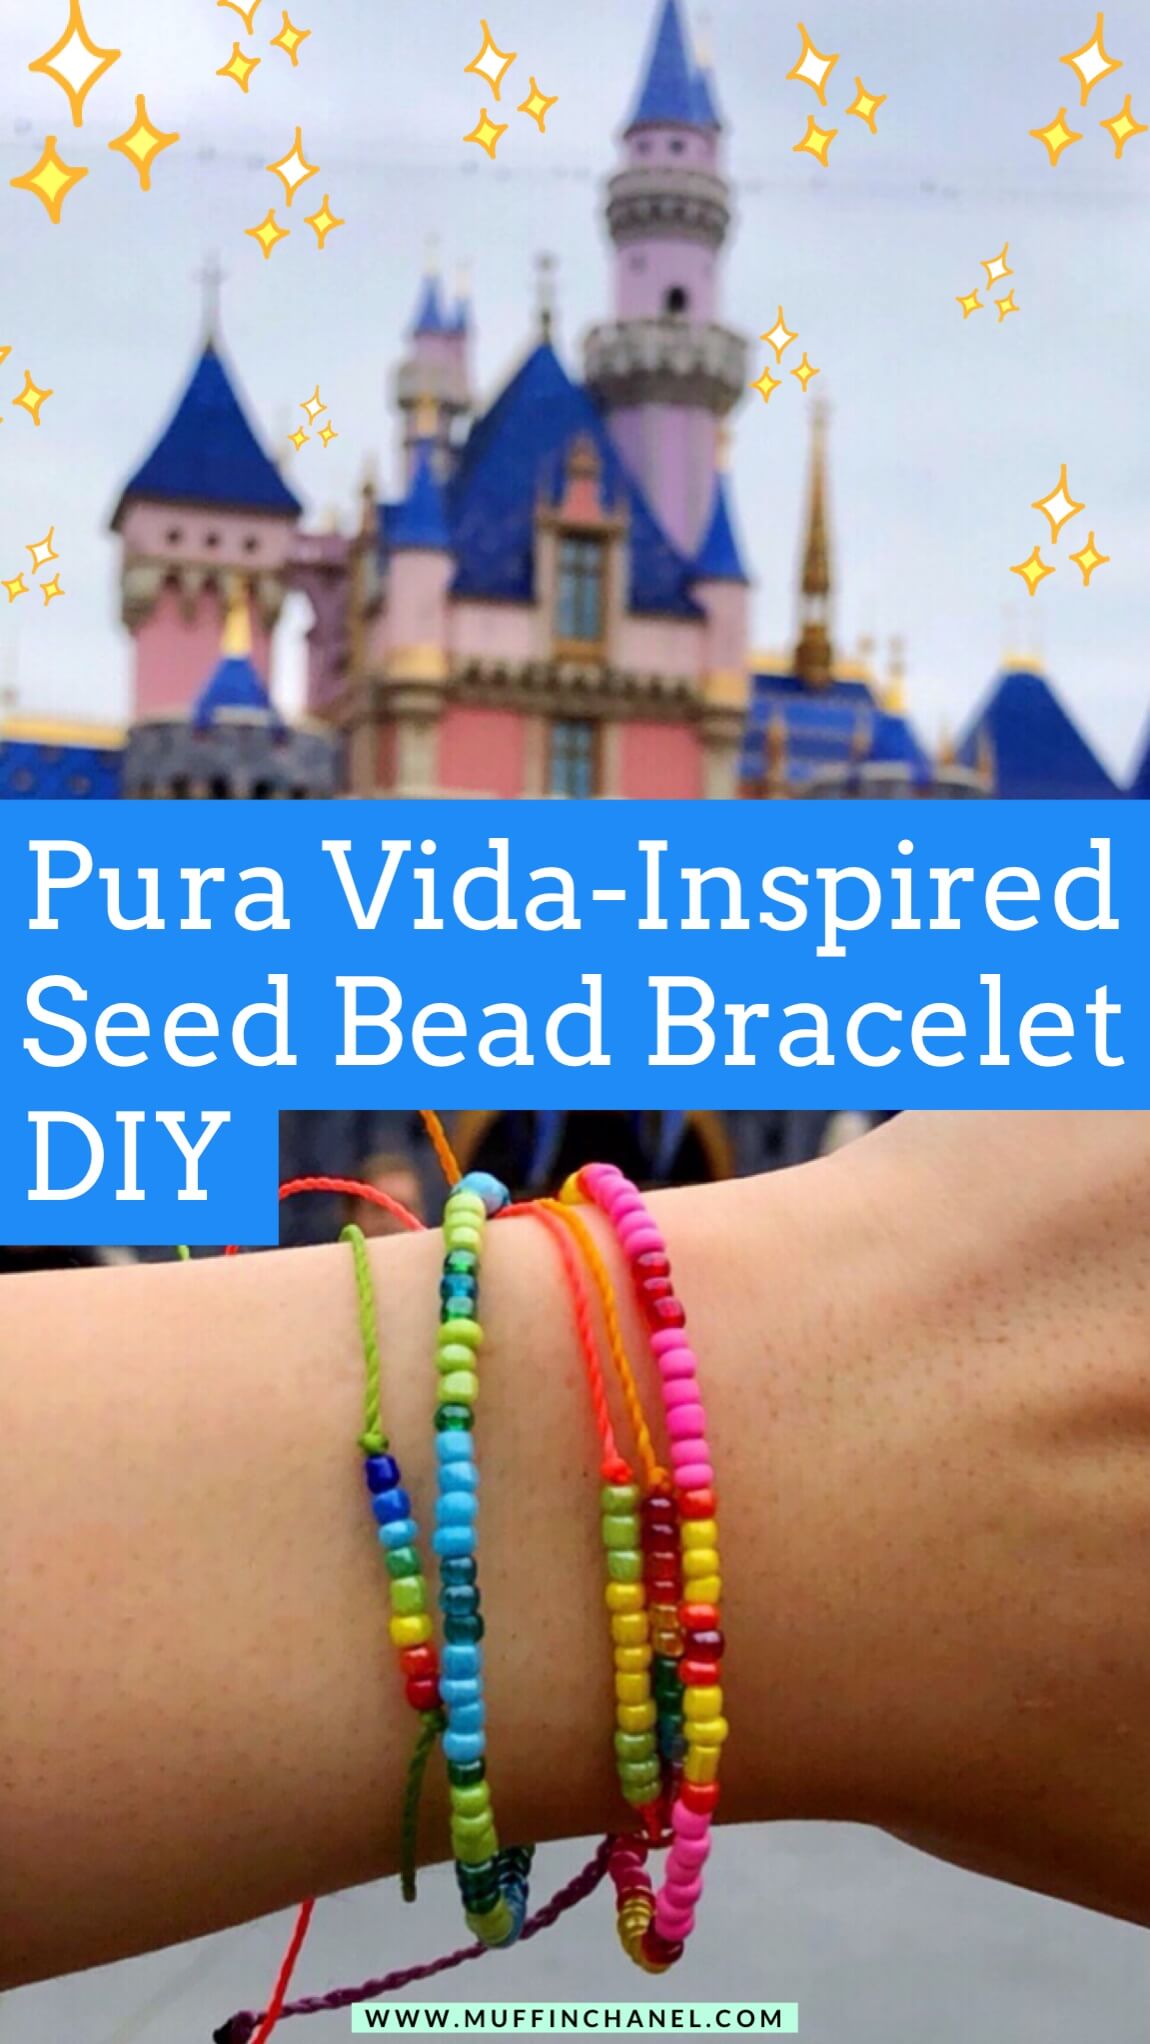 How to Make Seed Bead Bracelets: FREE Tutorial on Bluprint | Craftsy